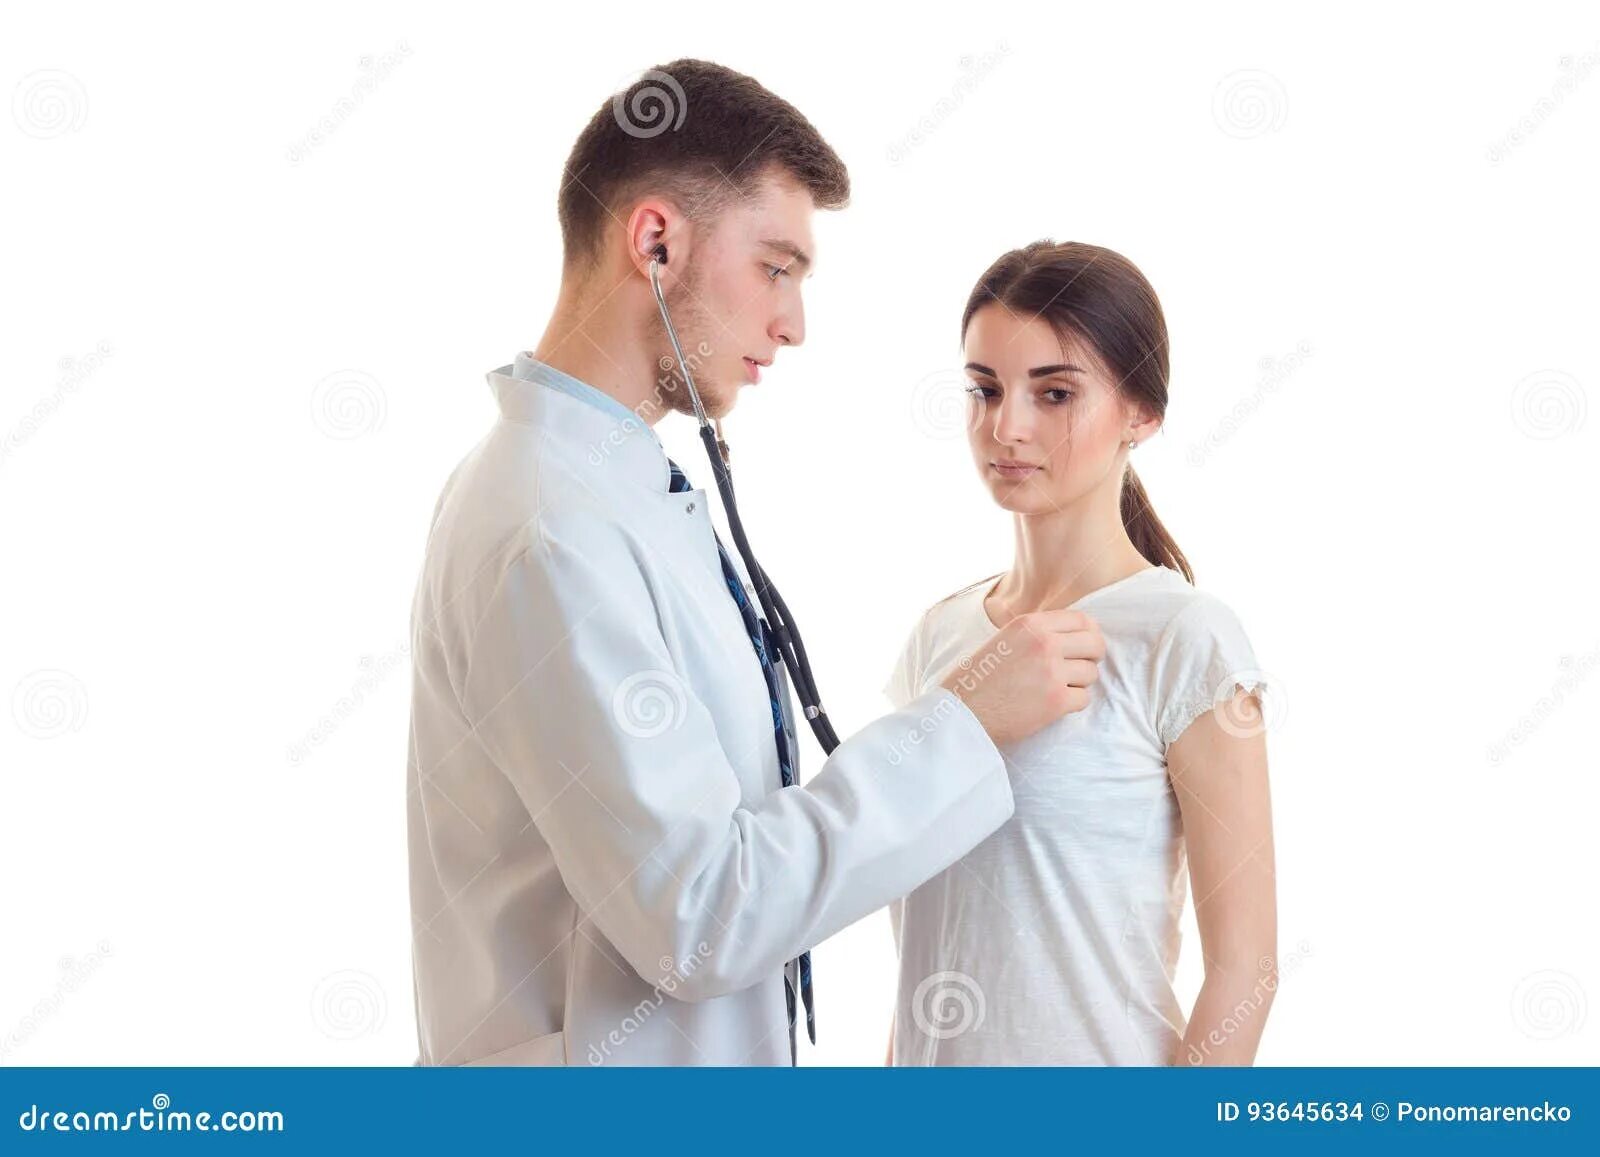 Сердцебиение девушки. Доктор стетоскоп в ушах. Юноша у врача. Врач слушает сердце. Медик с стетоскопом в ушах.